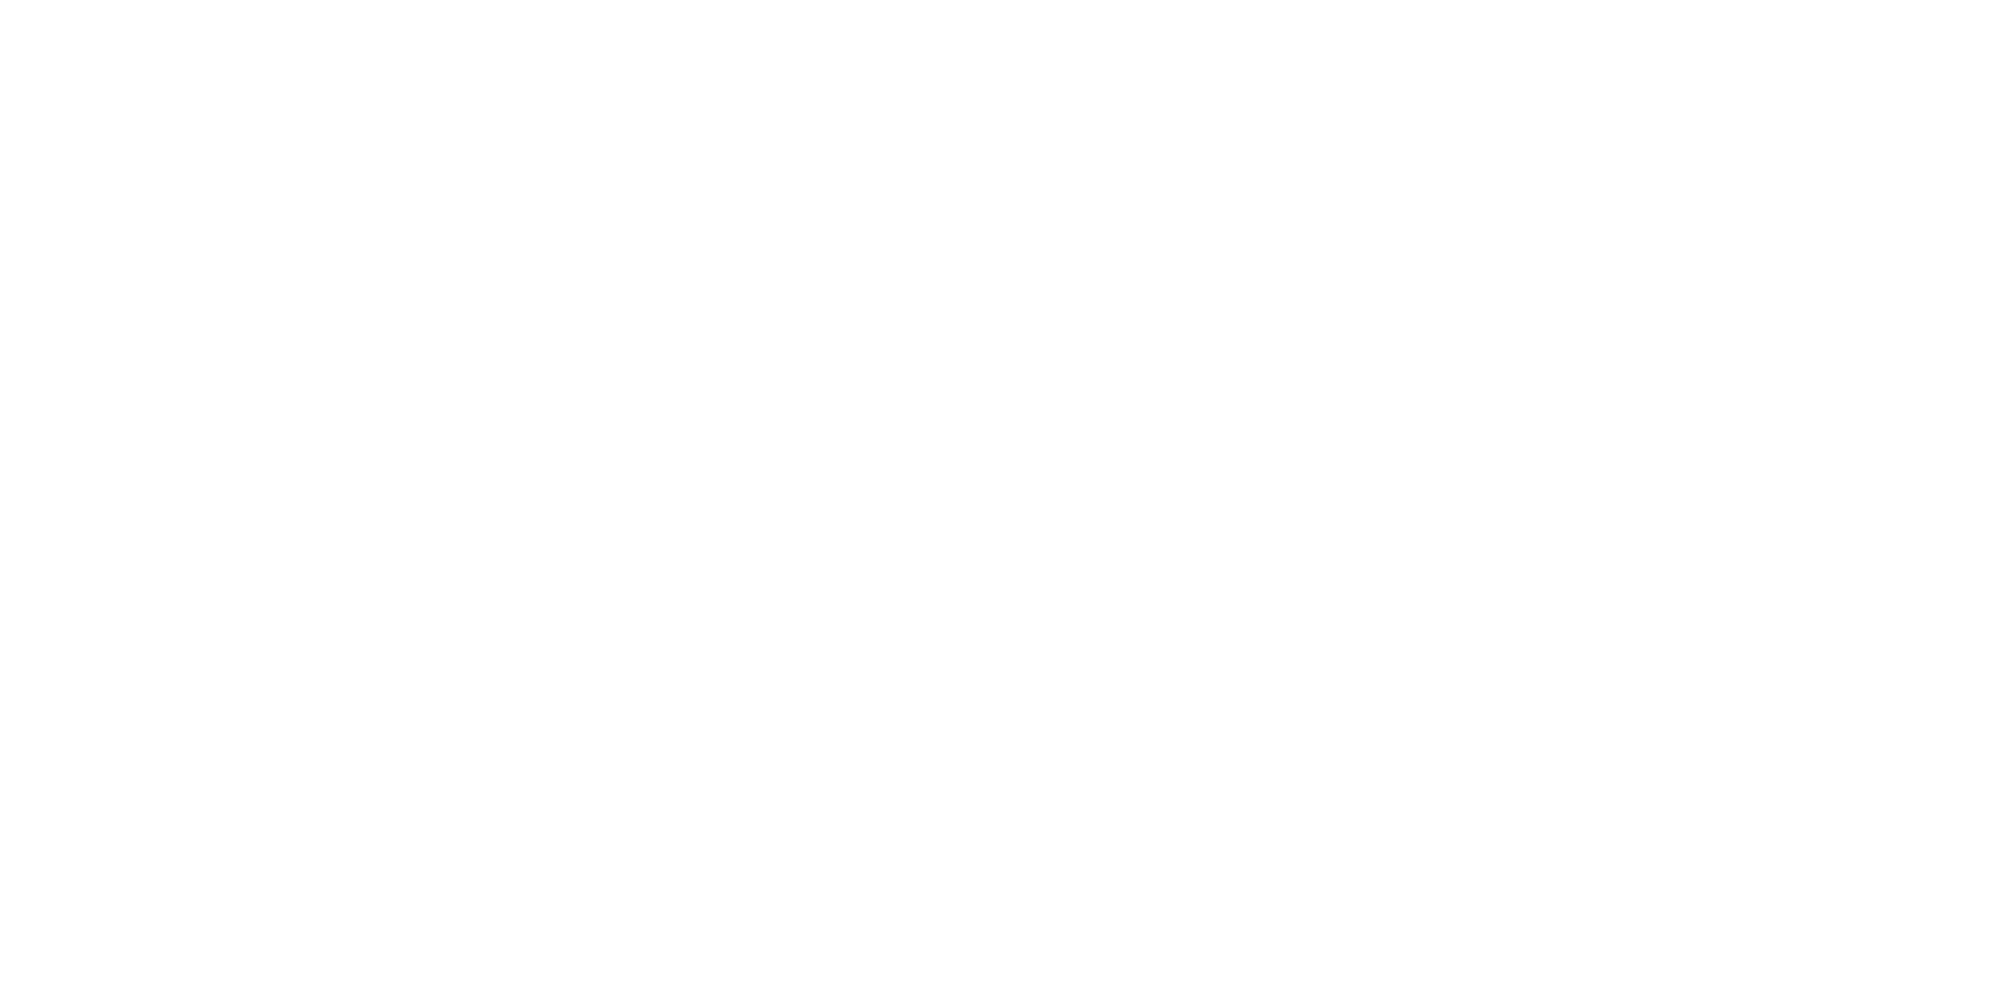 Blue Radio FM